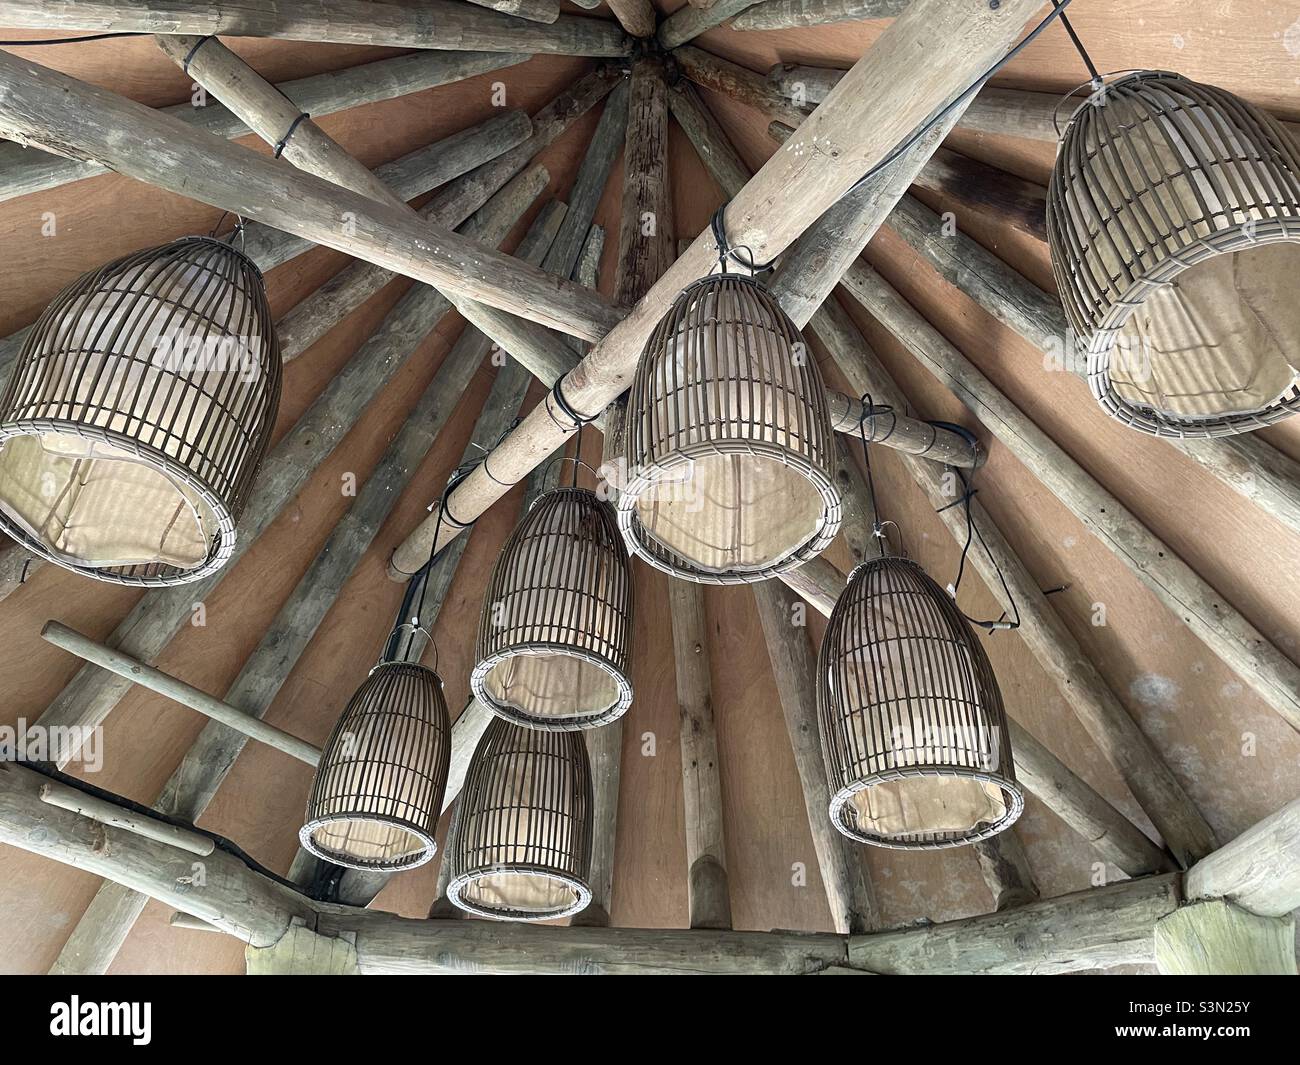 Wooden lanterns in a hut Stock Photo